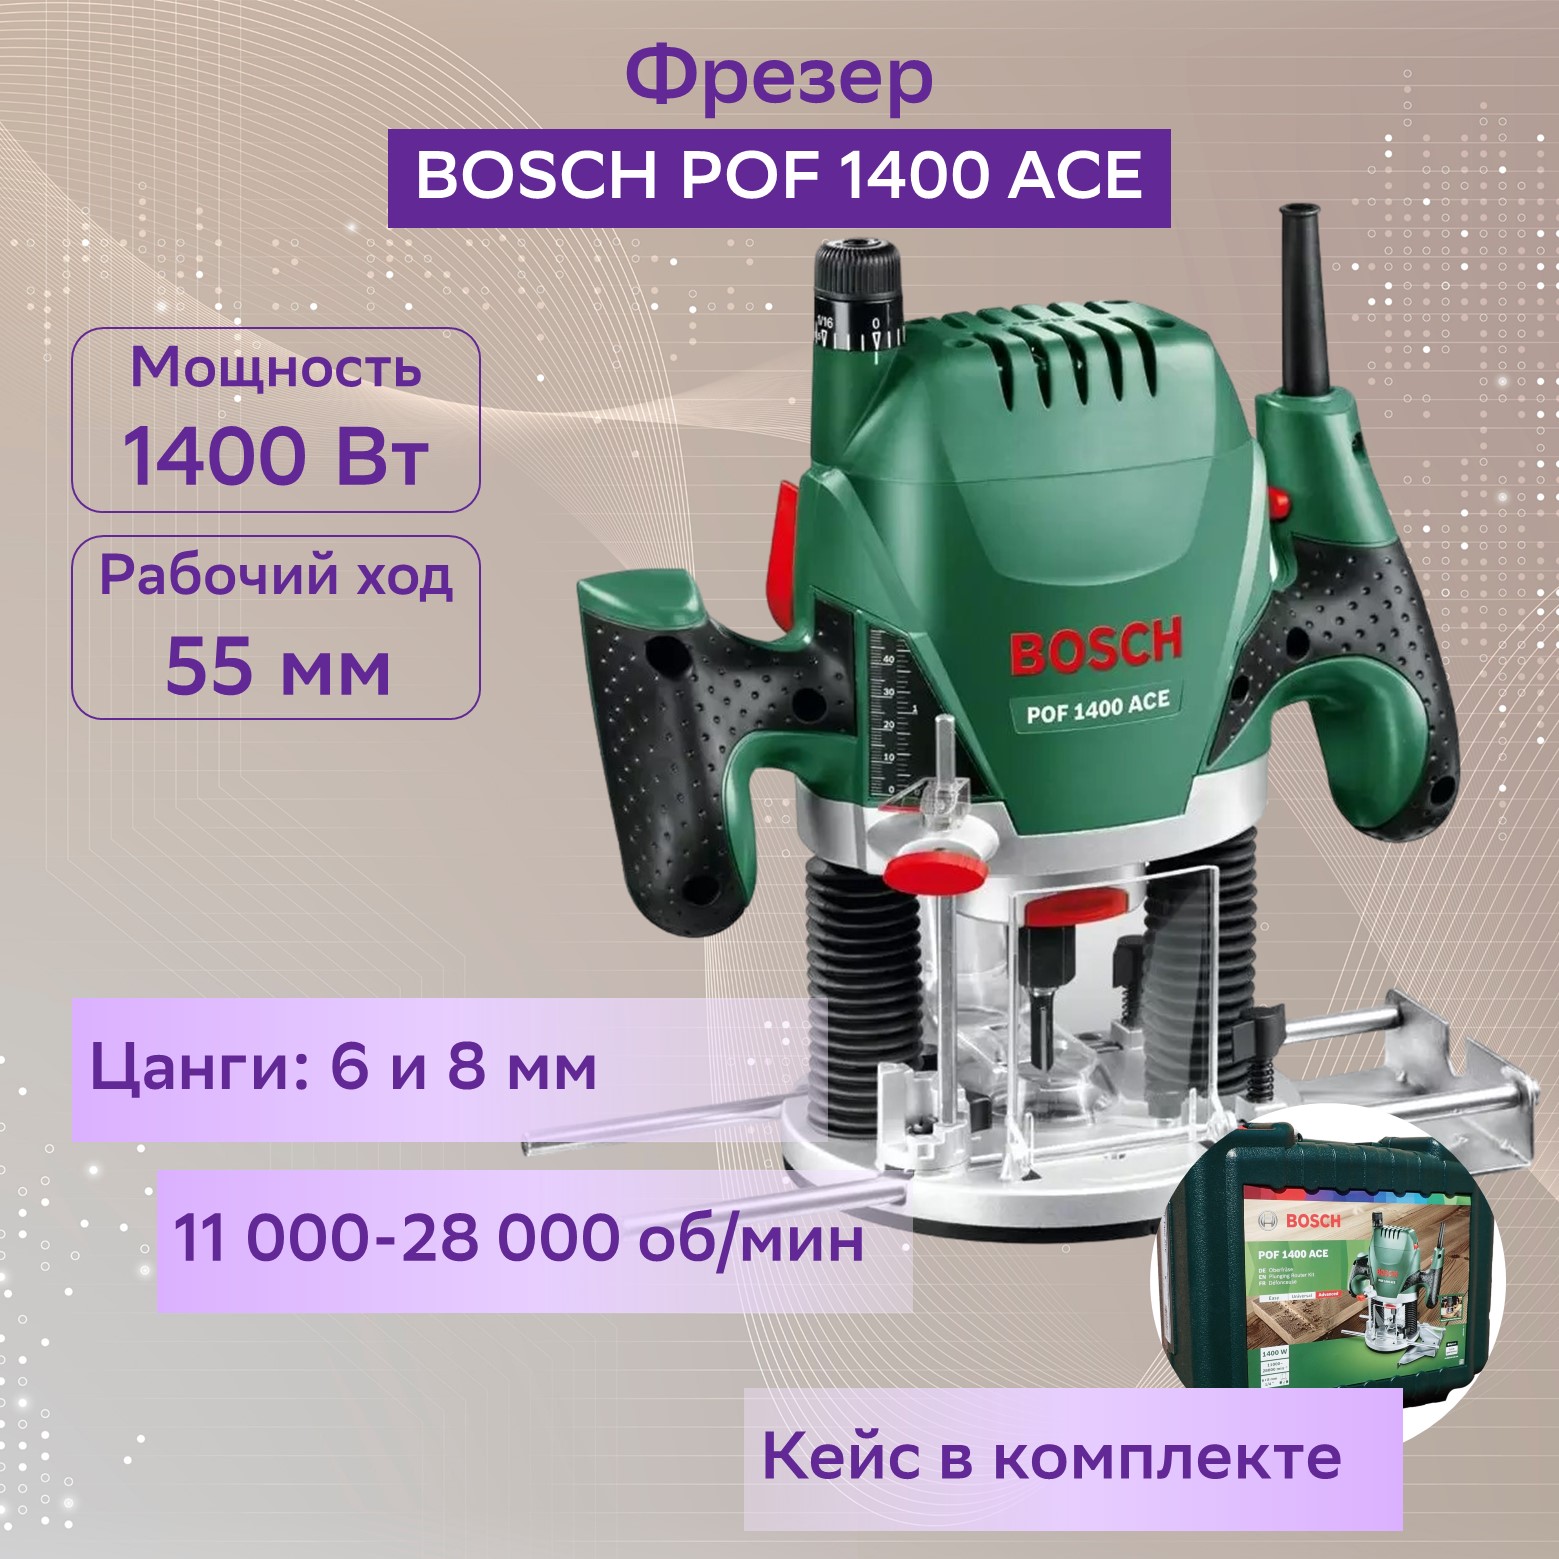 Bosch 1400 купить. Фрезер бош 1400. Bosch POF 1400 Ace. POF 1400 Ace. Фрейзер бош 1400 профи.